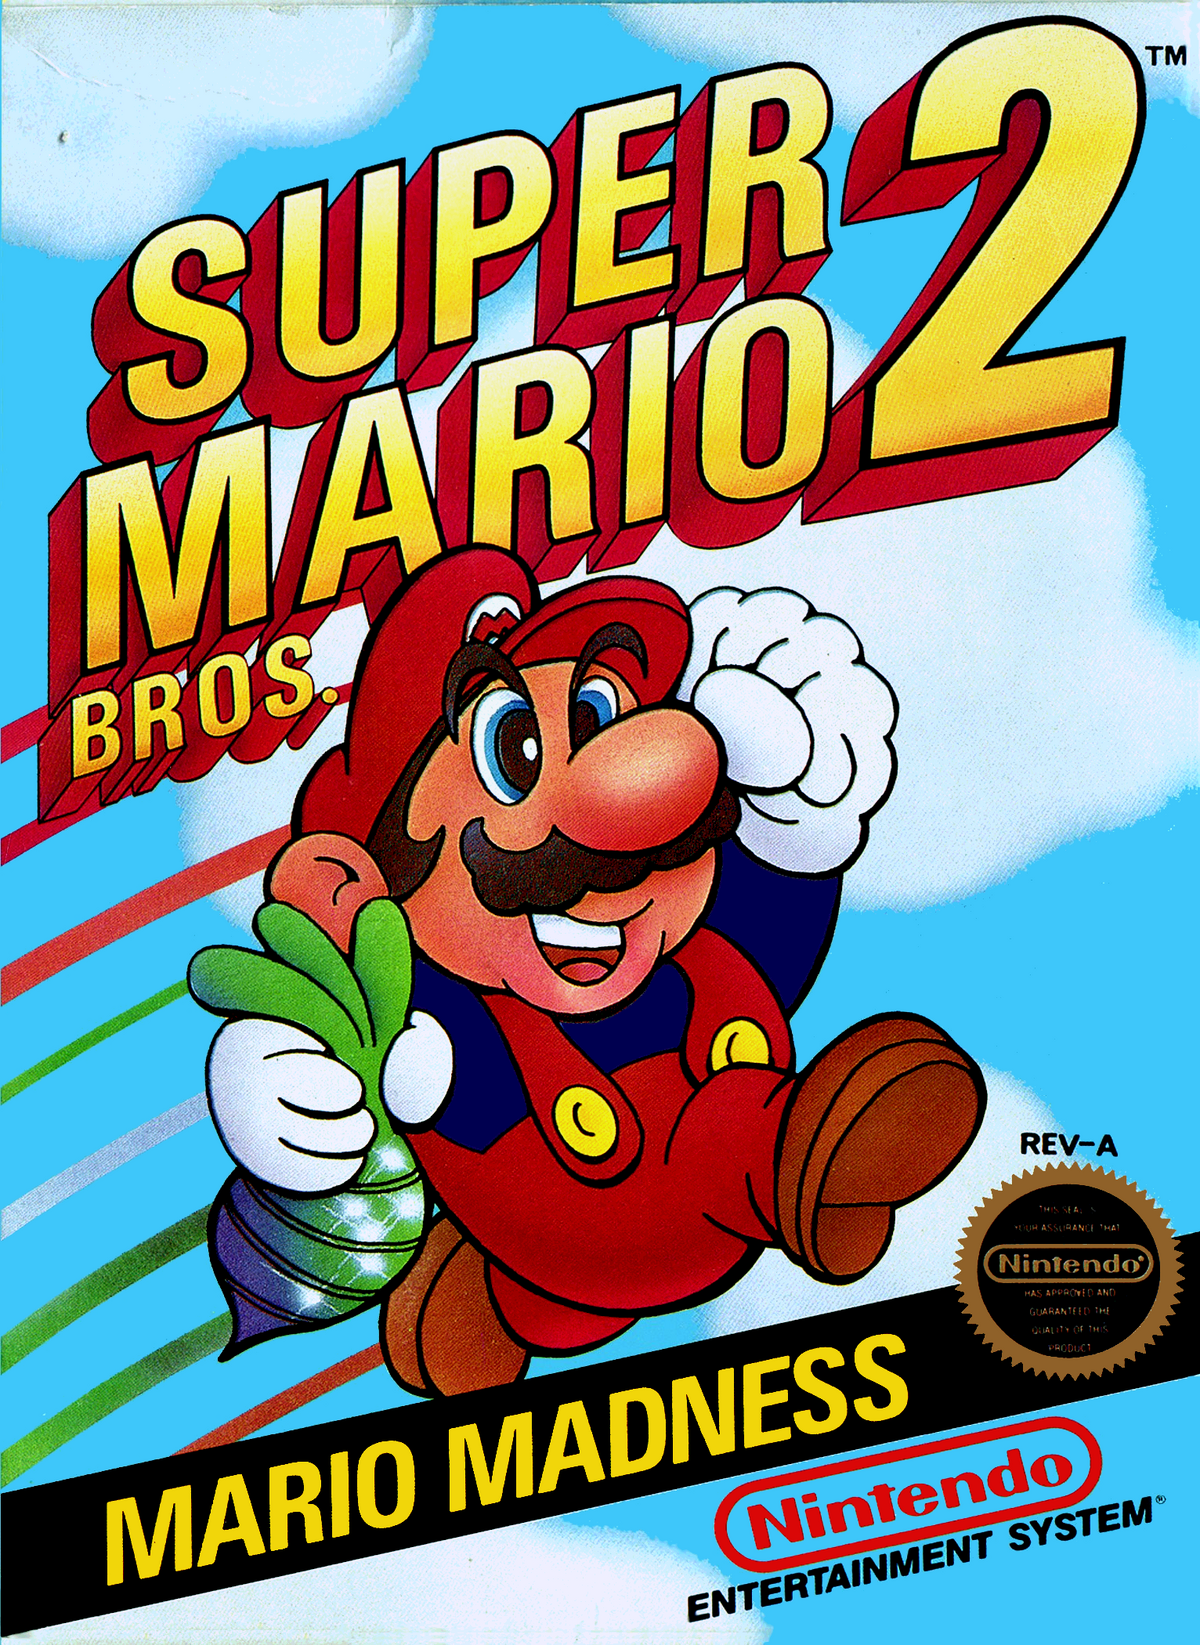 Super Mario Bros. 35 (Game) - Giant Bomb